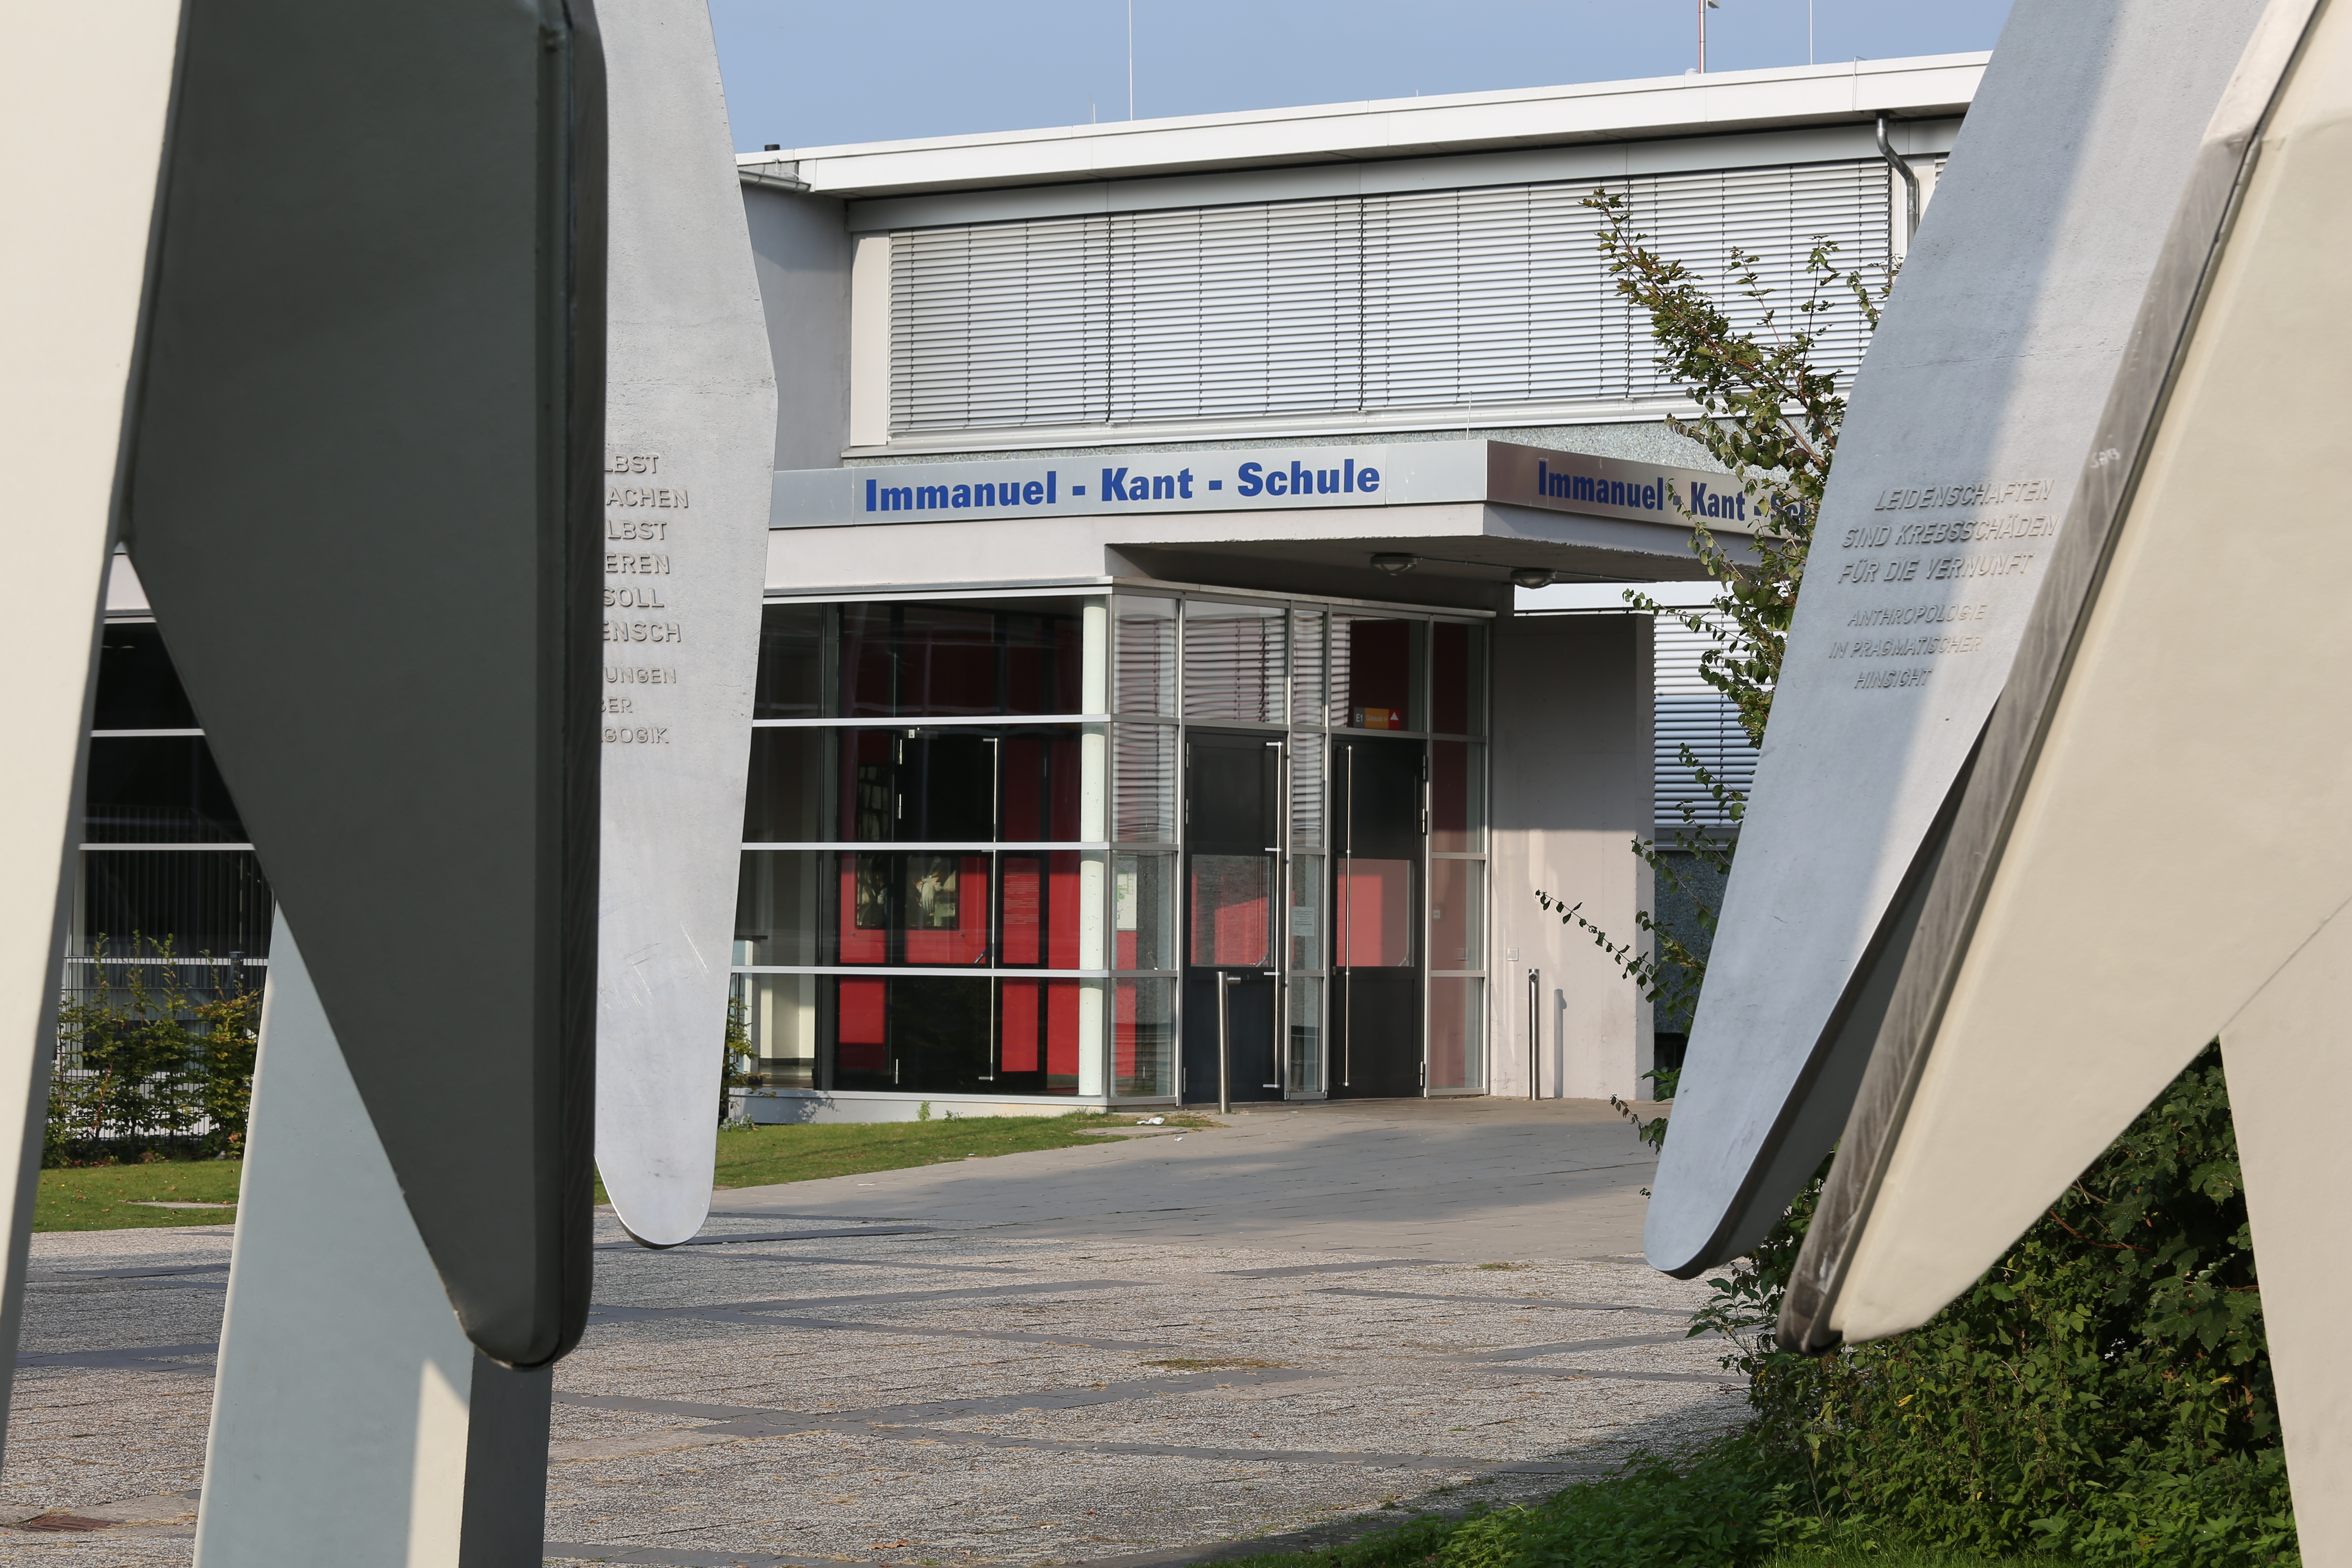 Haupteingang der Immanuel-Kant-Schule in Rüsselsheim am Main, fotografiert aus SSW